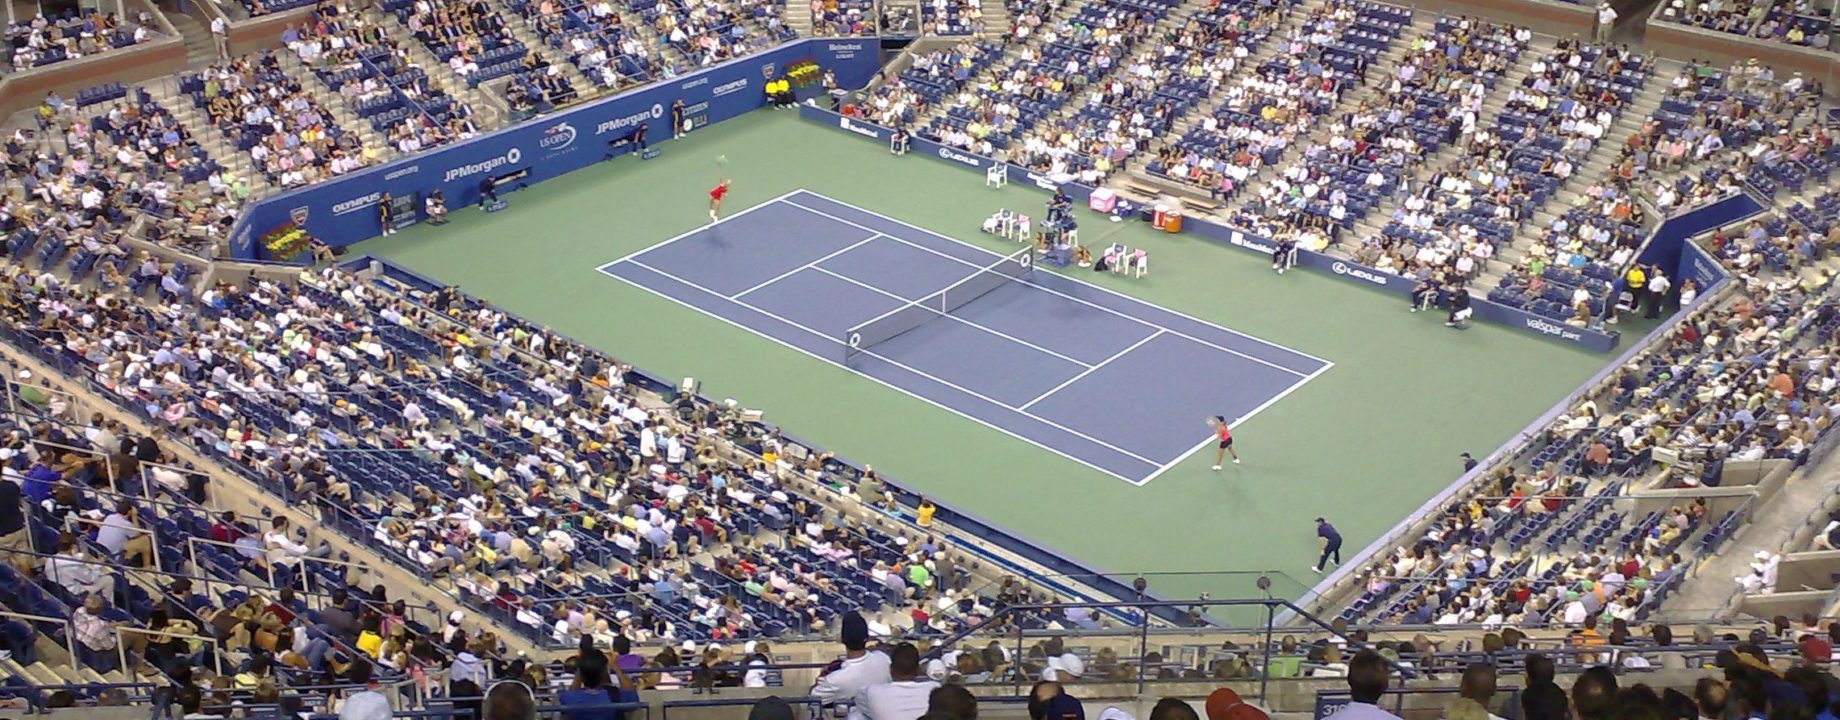 US Open 2007 Maria Sharapova serving